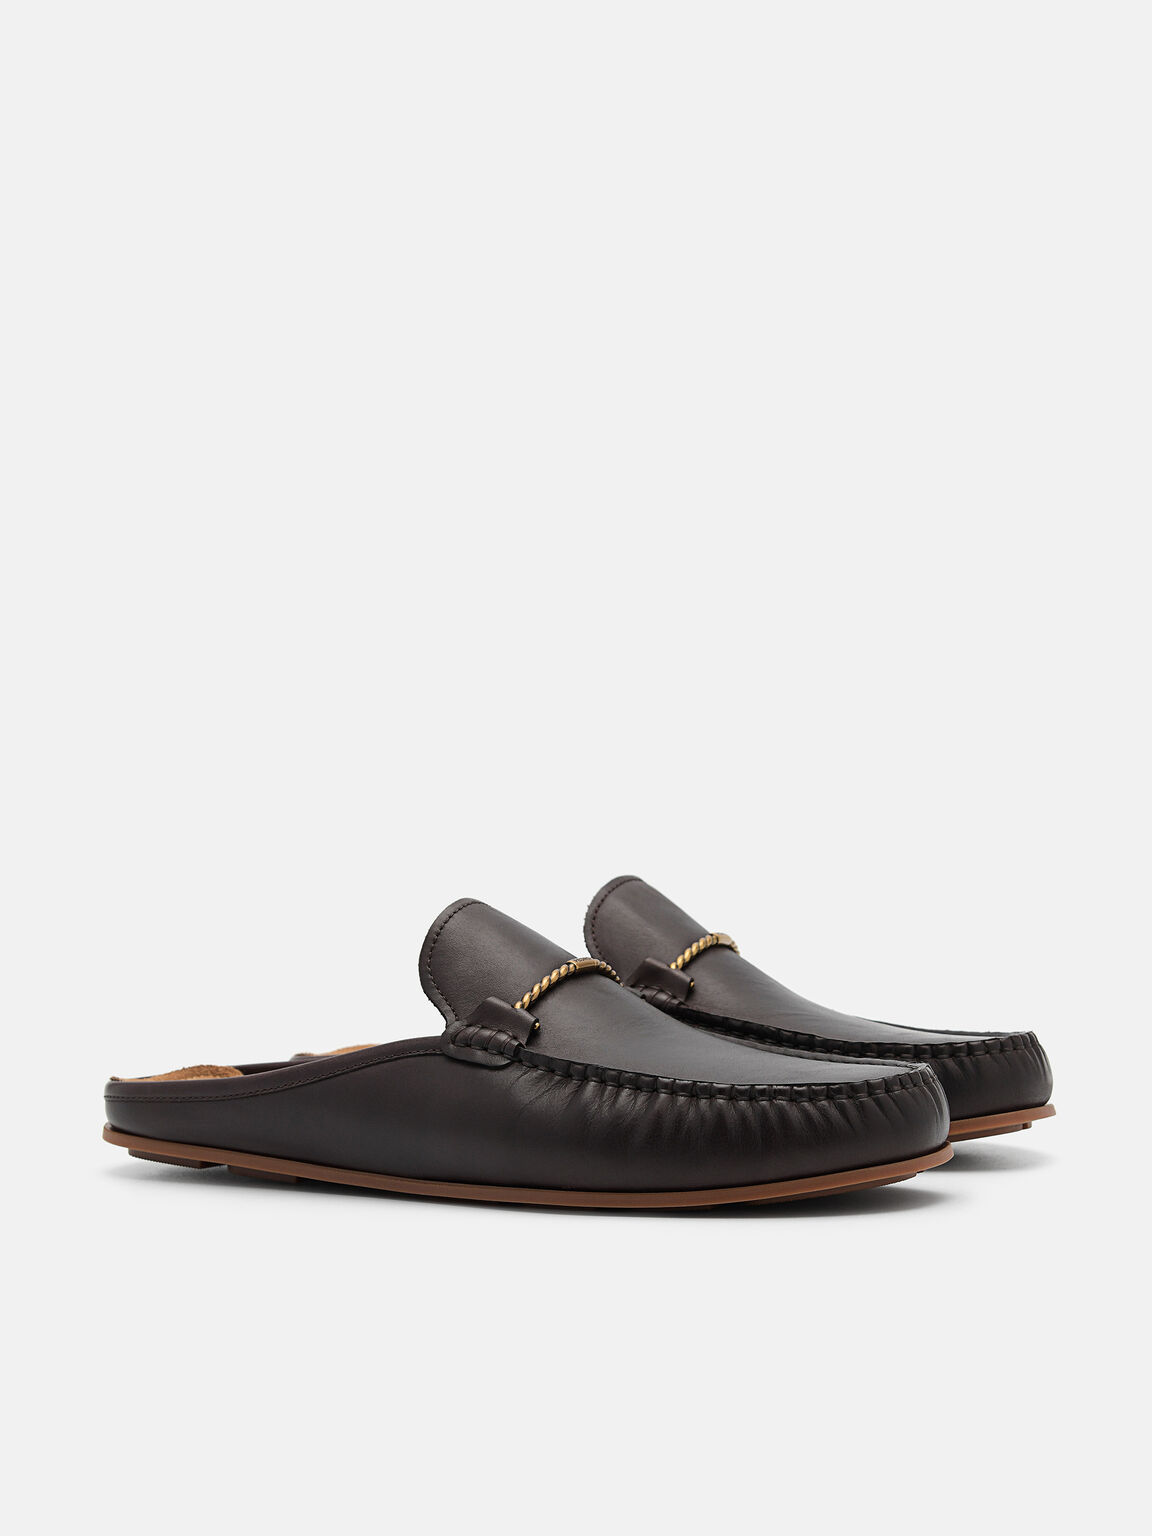 Hawser Leather Slip-On Driving Shoes, Dark Brown, hi-res